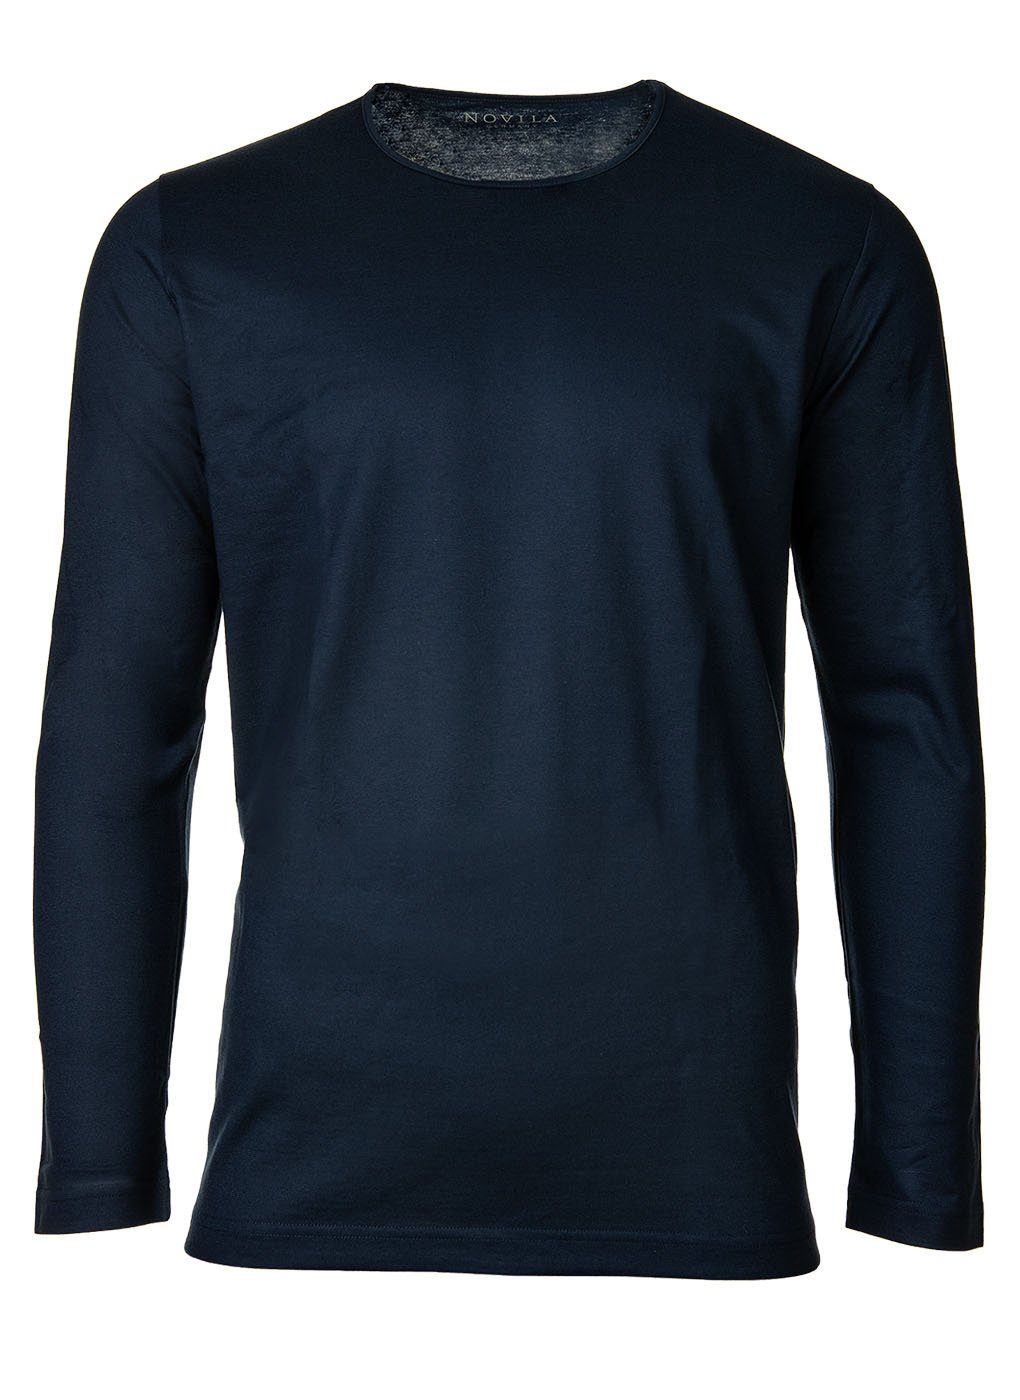 Herren langarm Shirt, Marine Sweatshirt 1/1 Novila Rundhals, Loungewear, -